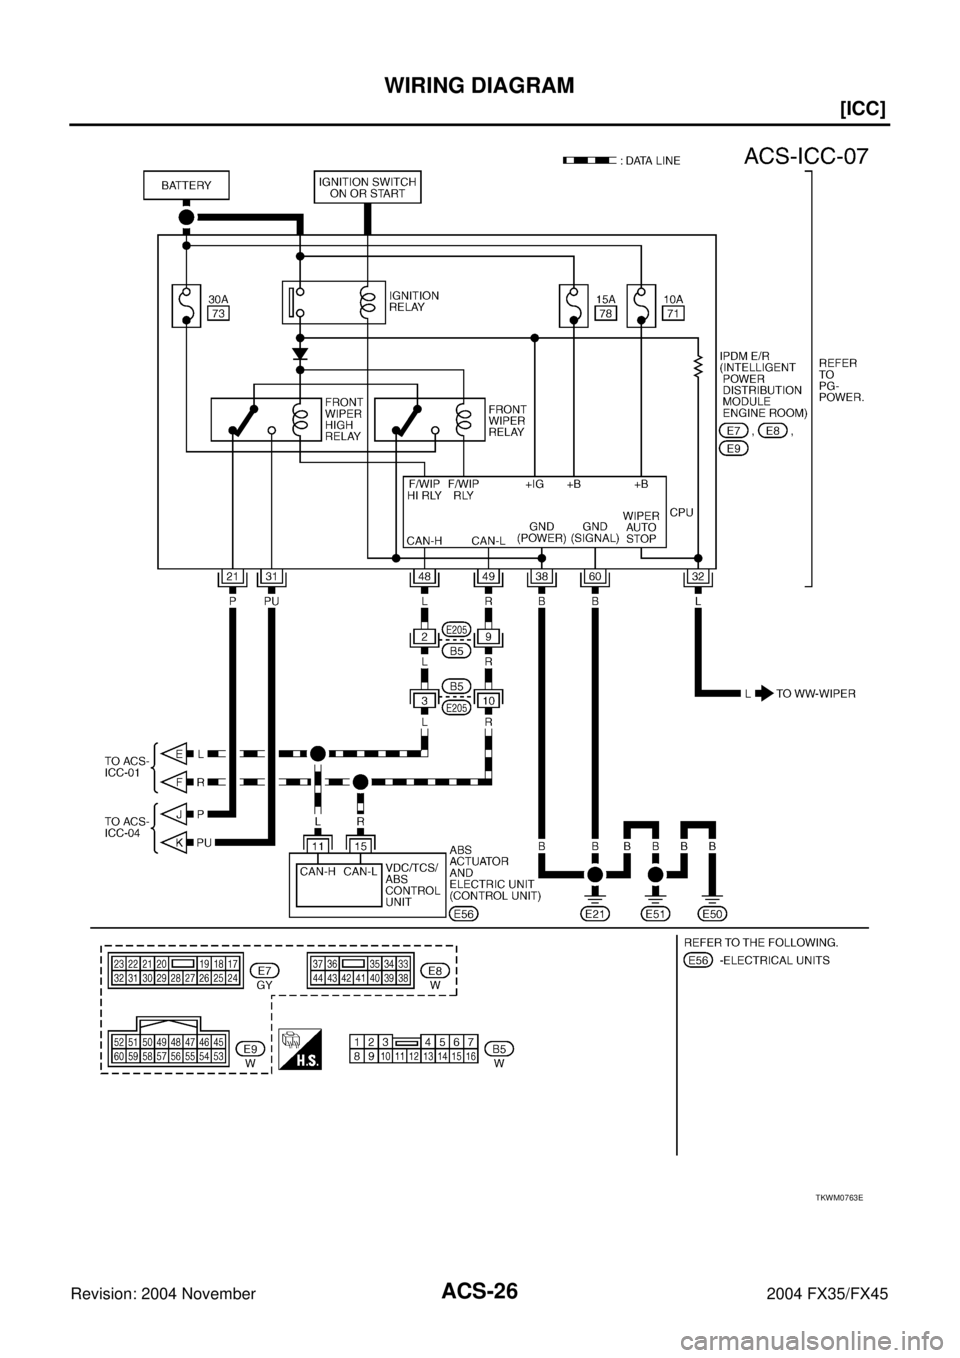 INFINITI FX35 2004  Service Manual ACS-26
[ICC]
WIRING DIAGRAM
Revision: 2004 November 2004 FX35/FX45
TKWM0763E 